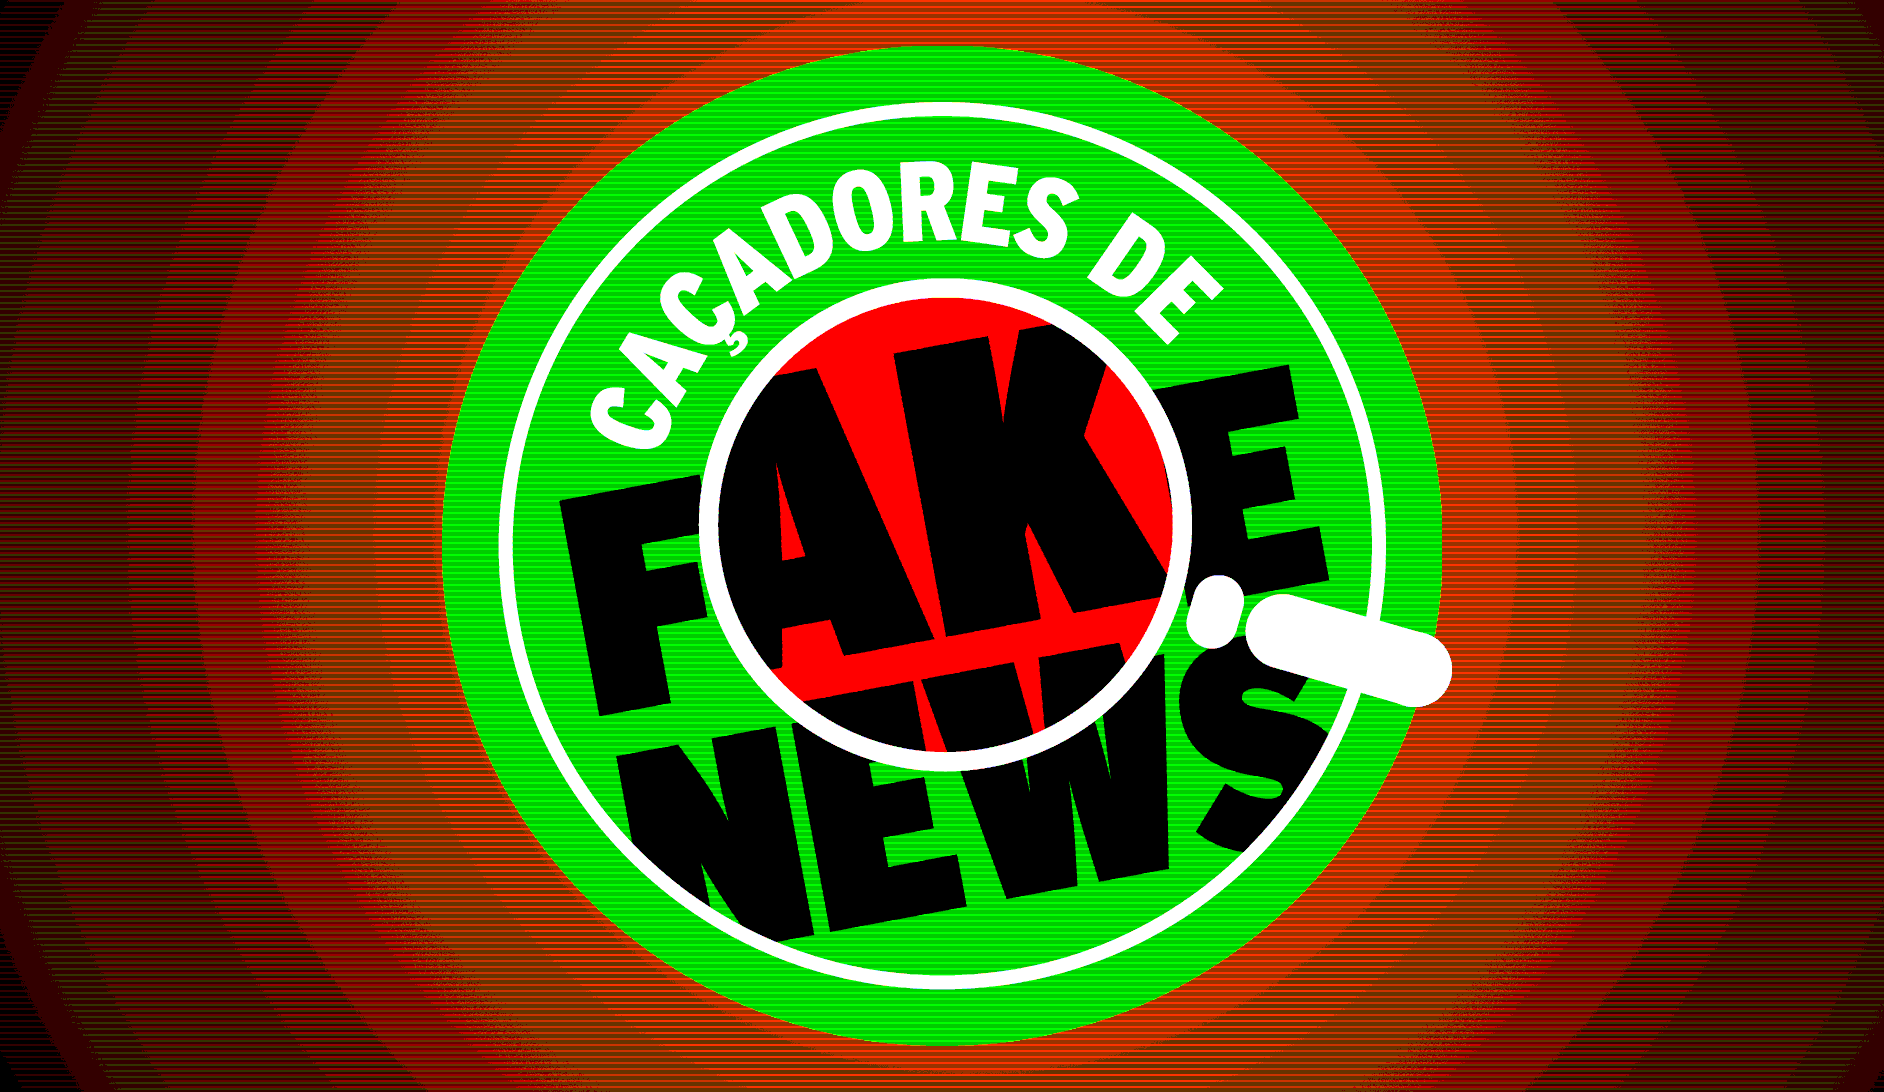 Caçadores de Fake News: como Lula utilizou a estrutura do governo para perseguir opositores